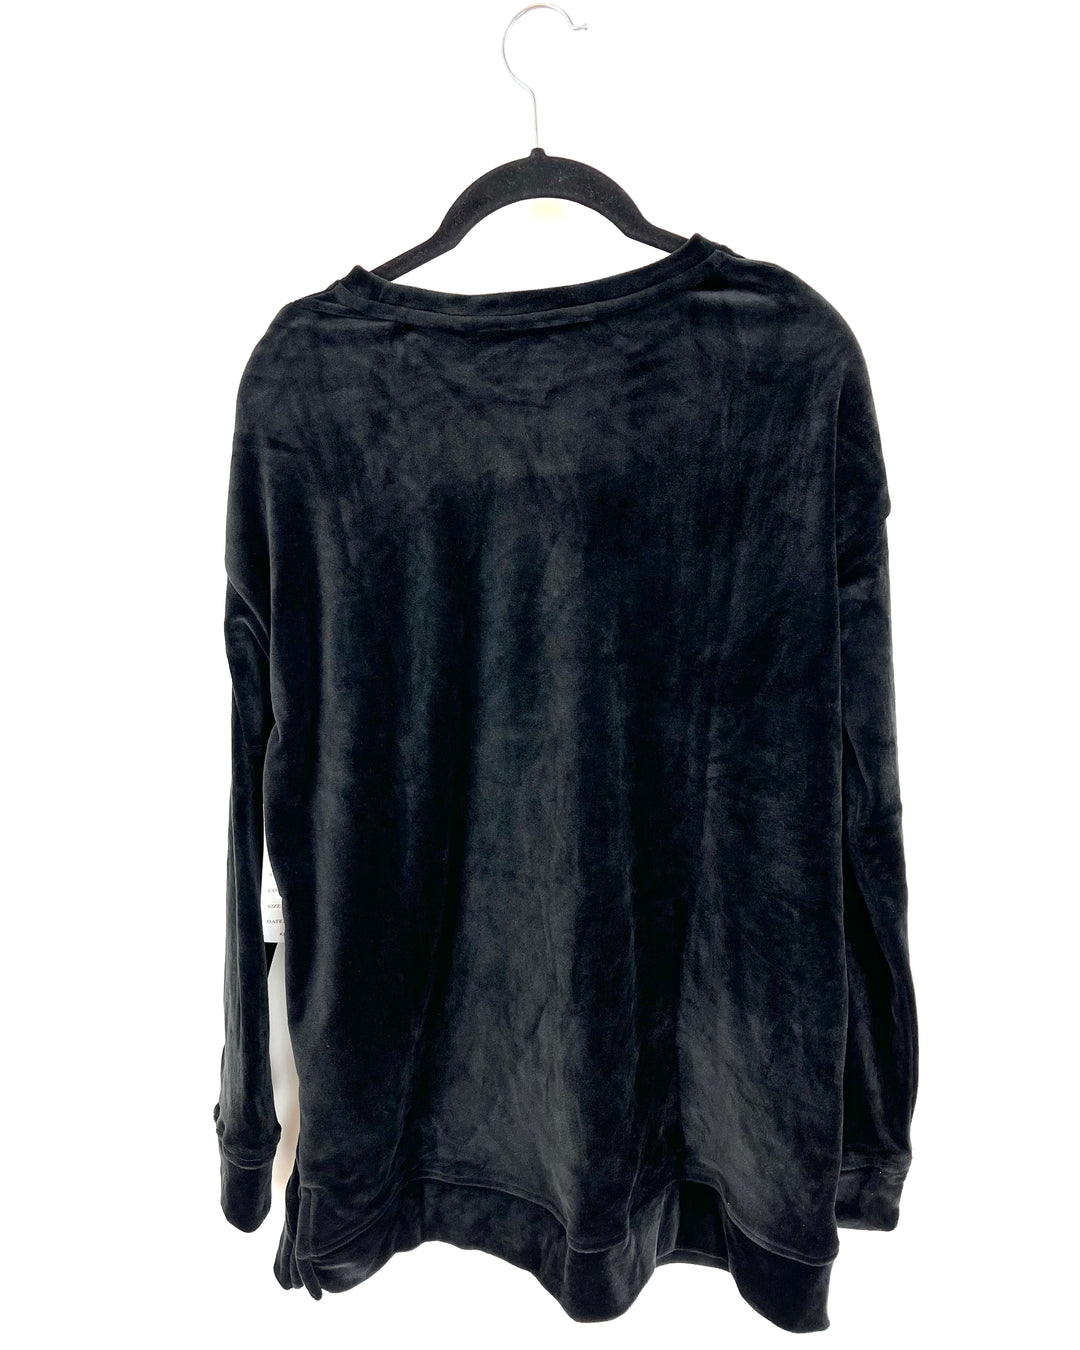 Black Long Sleeve Fleece Top - Size 4/6